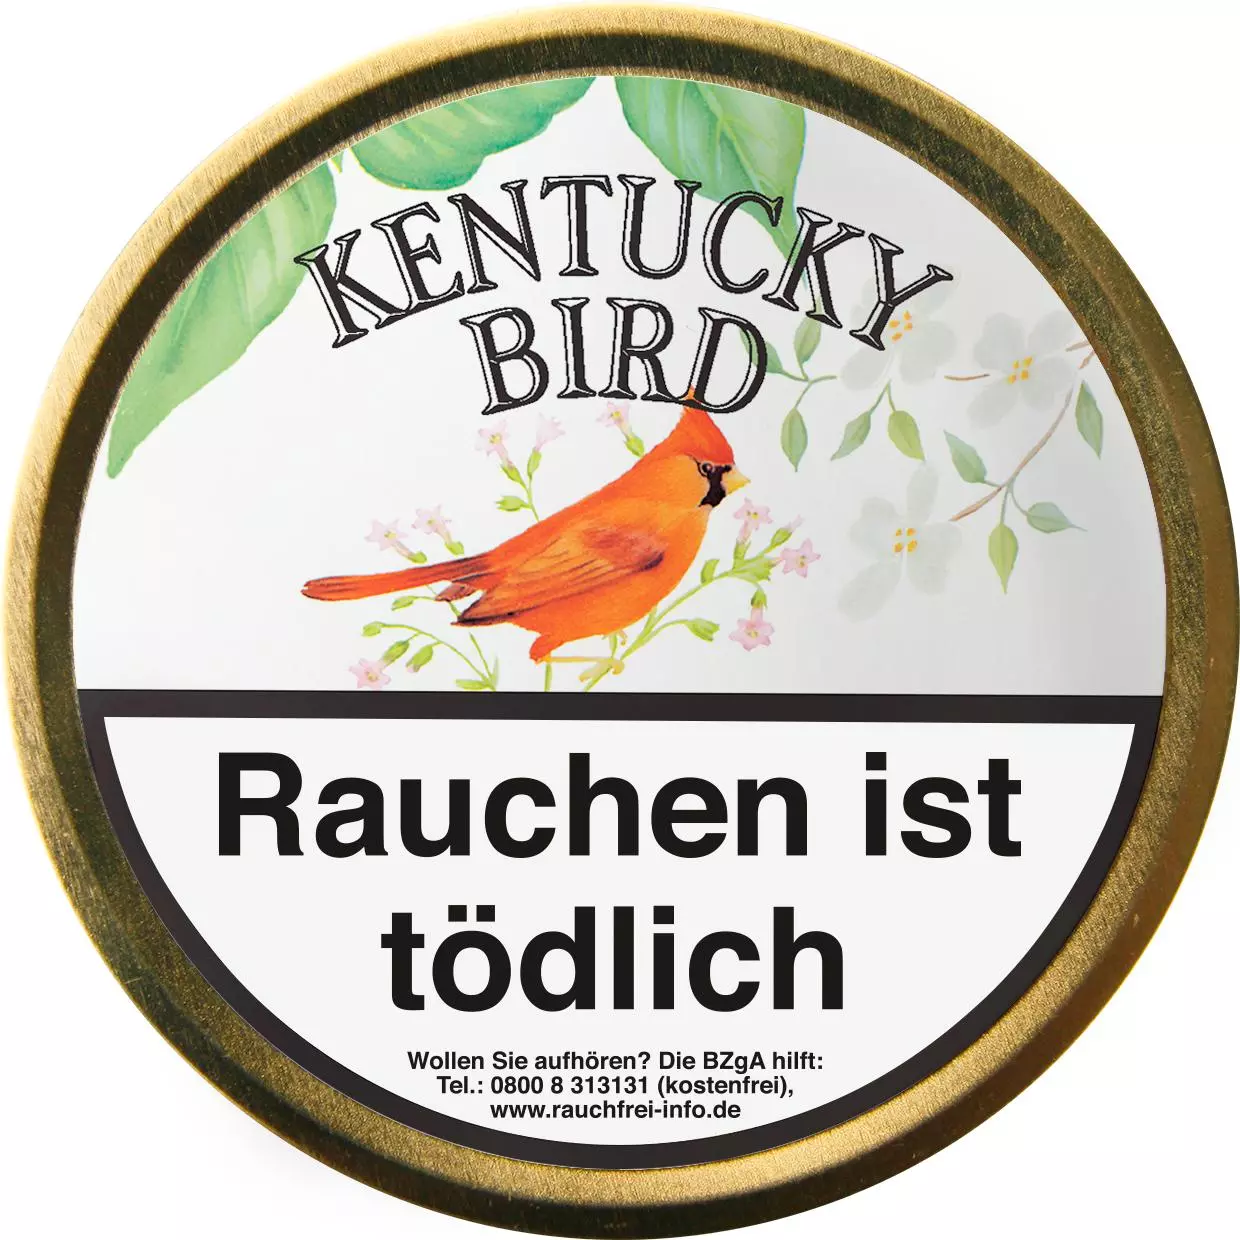 Kentucky Bird Pfeifentabak 1 x 100g Krüll